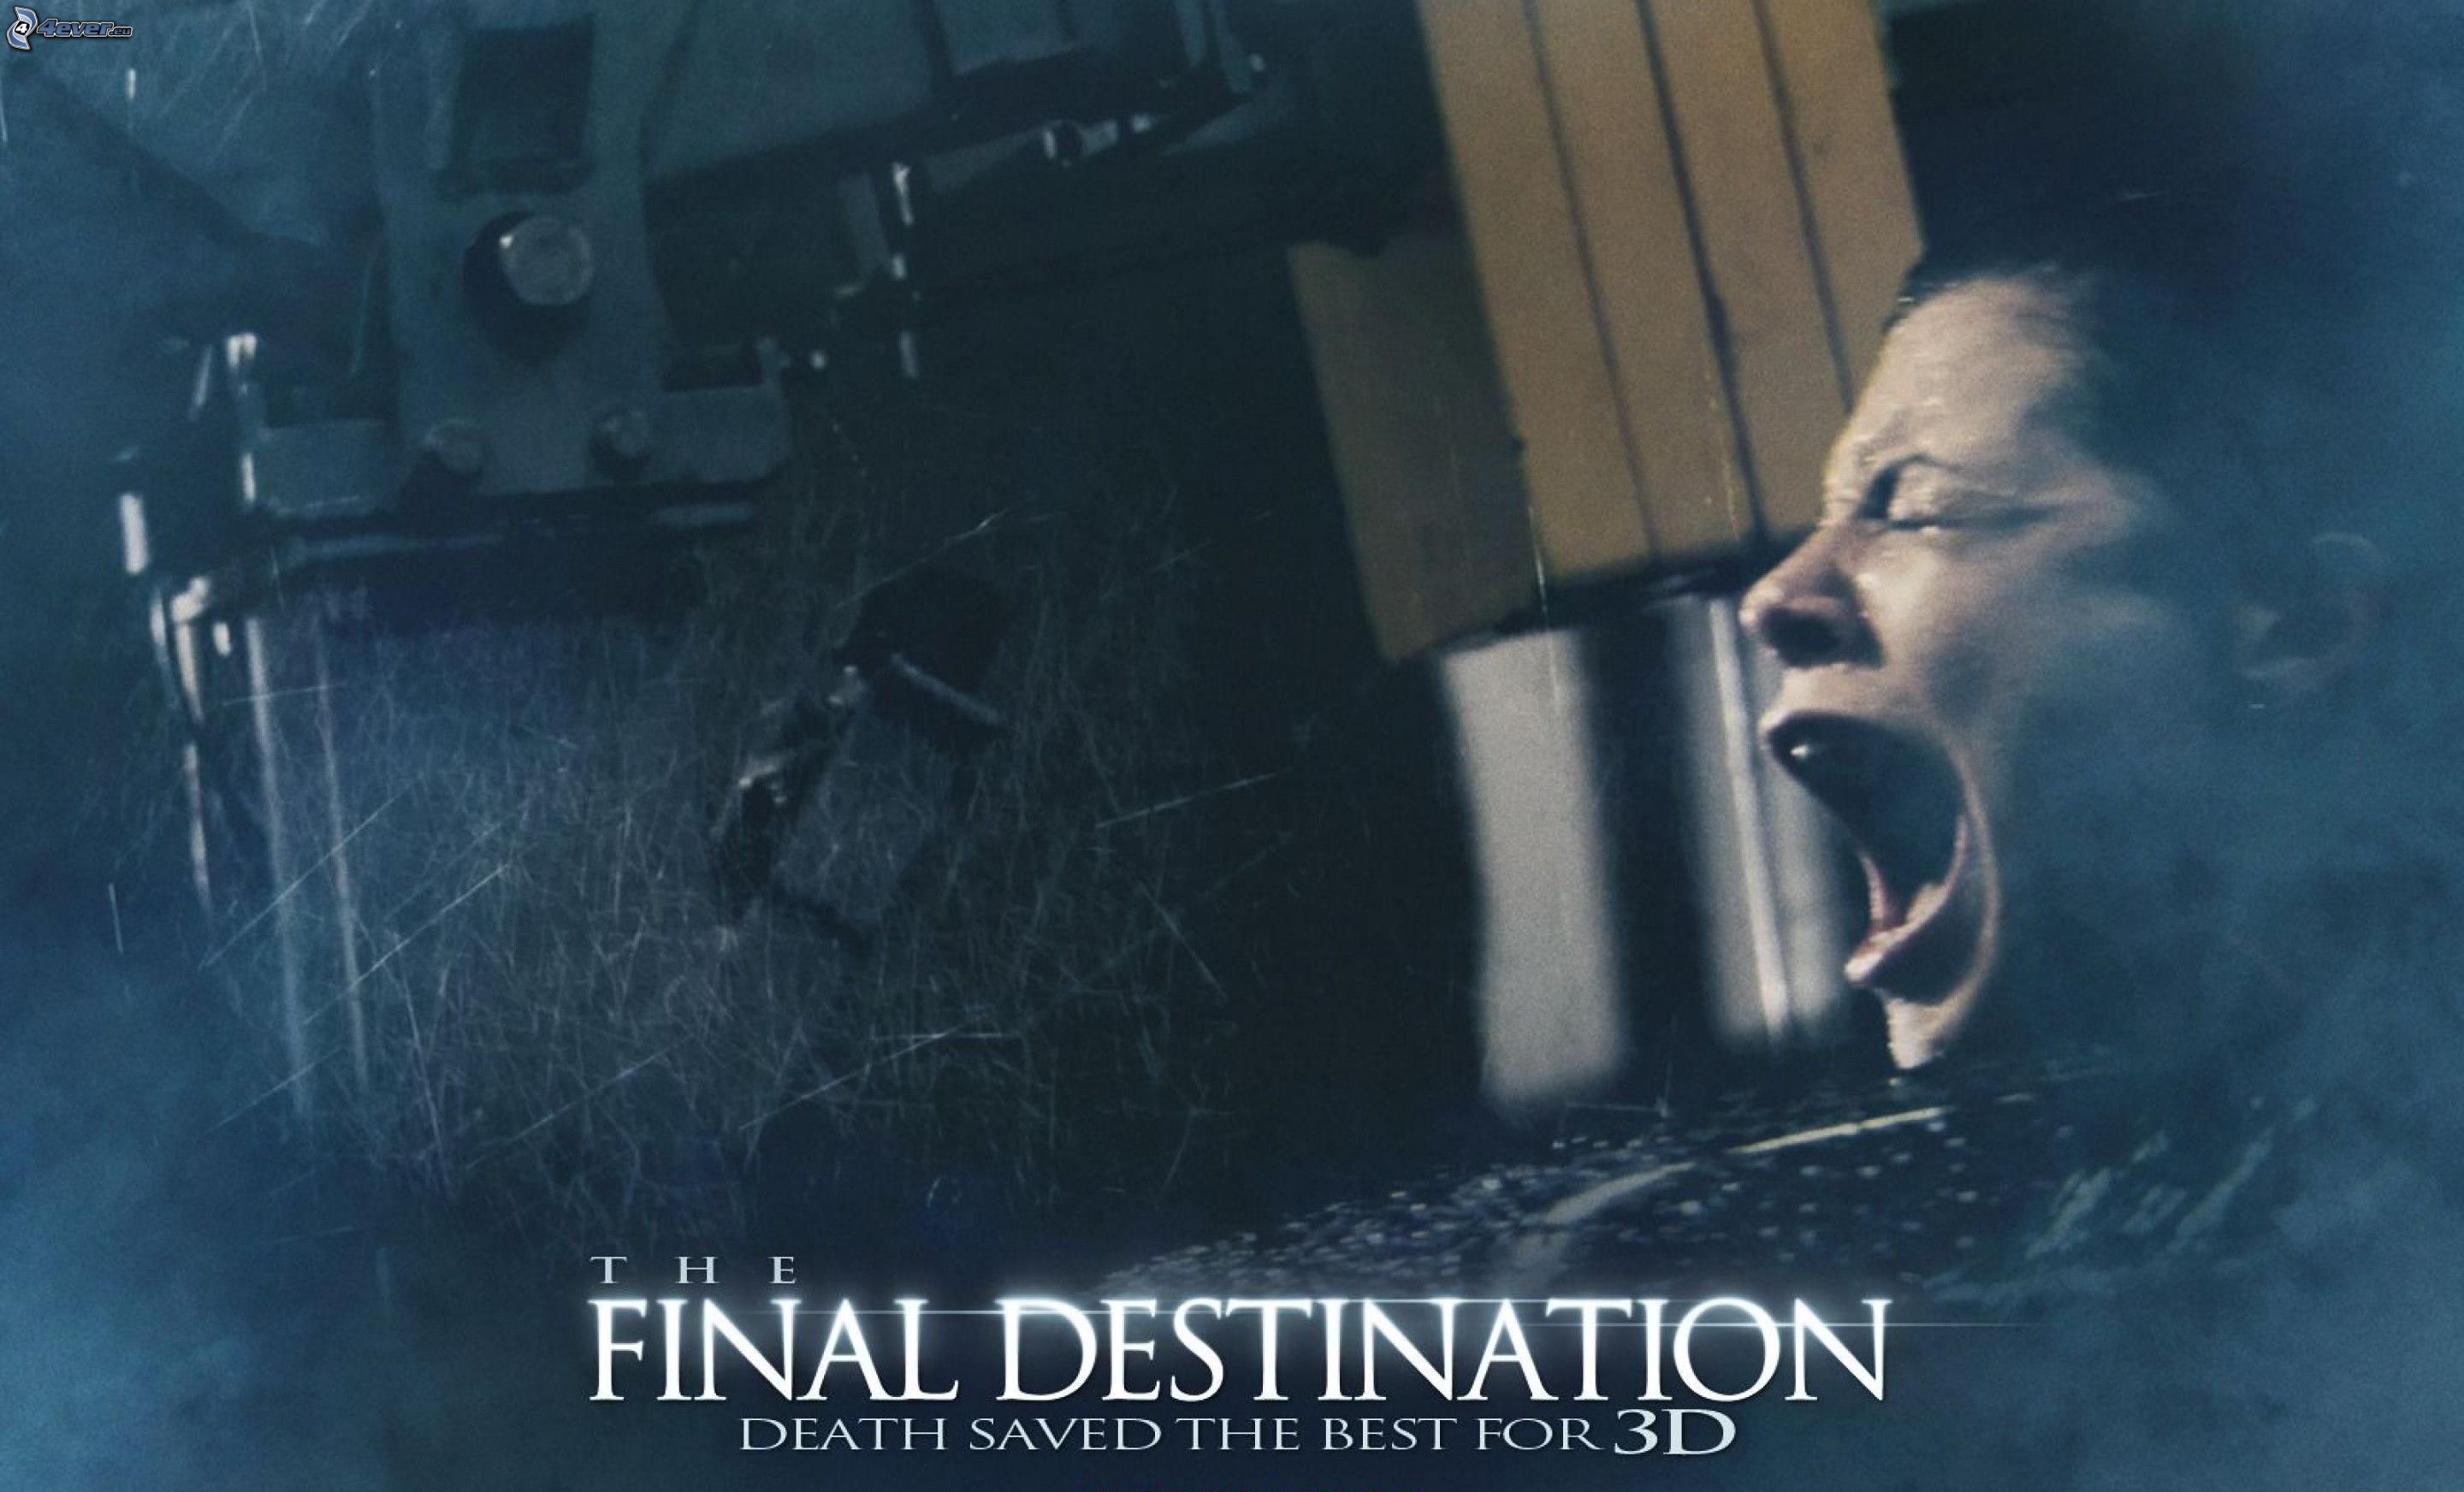 final destination 4 full movie download